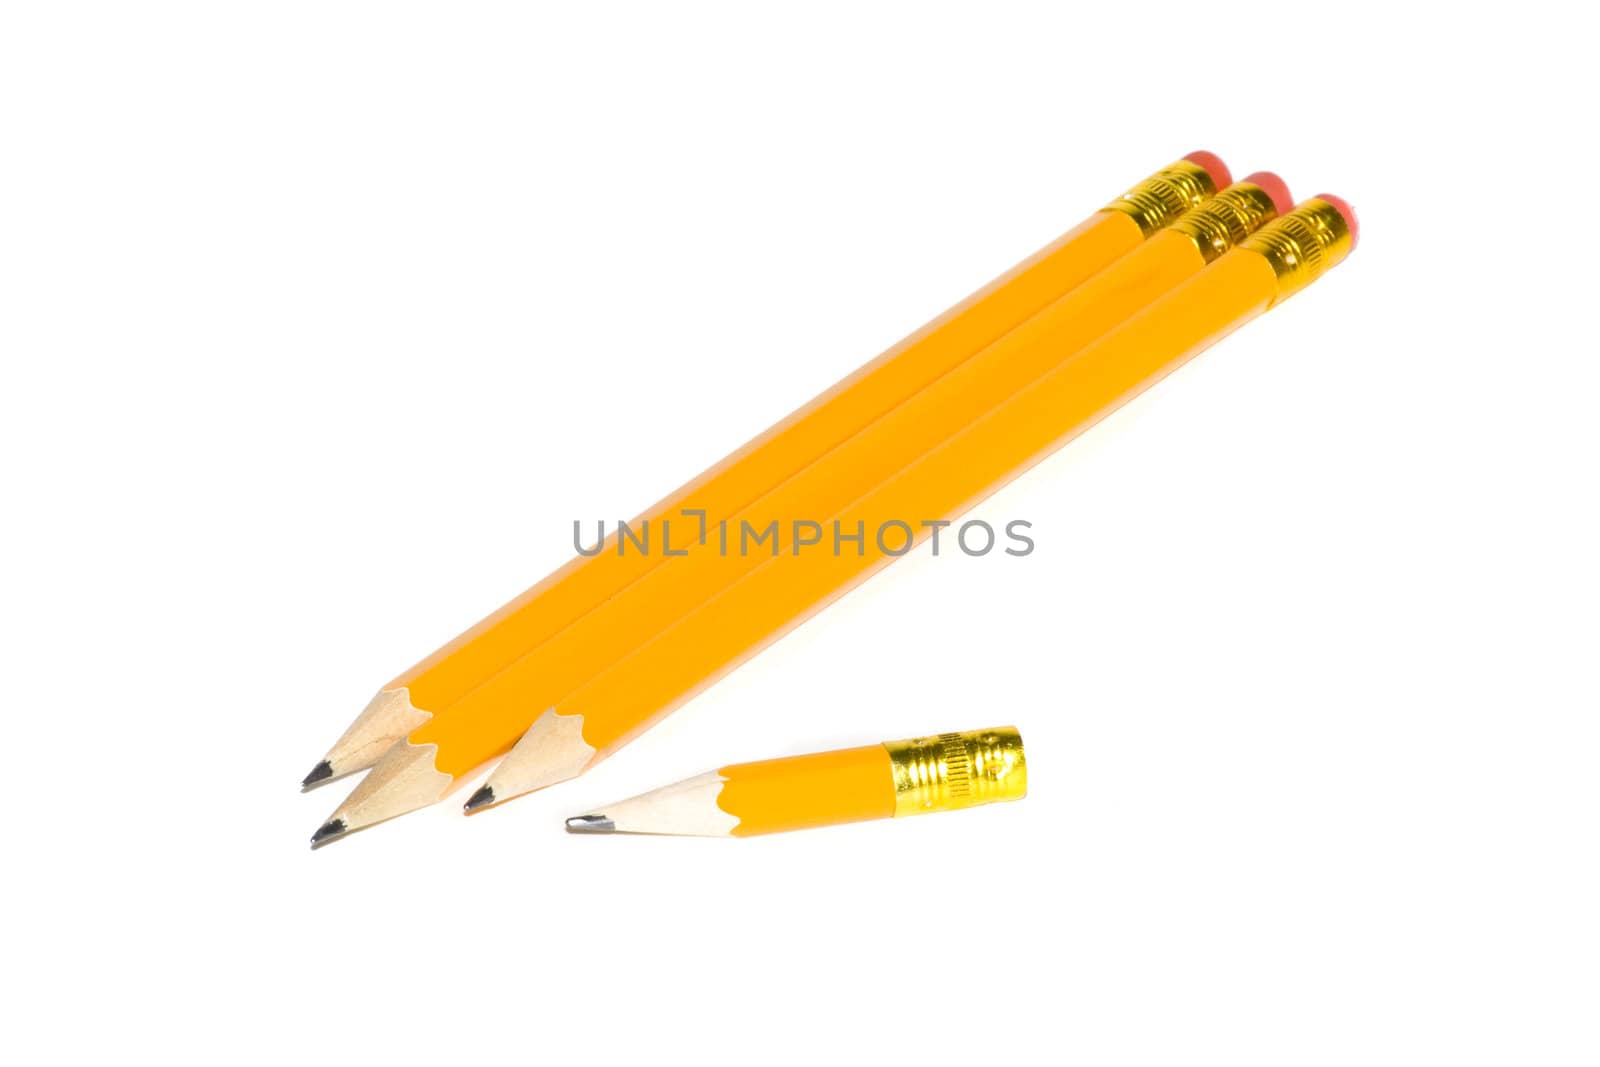 Pencils by Dan70